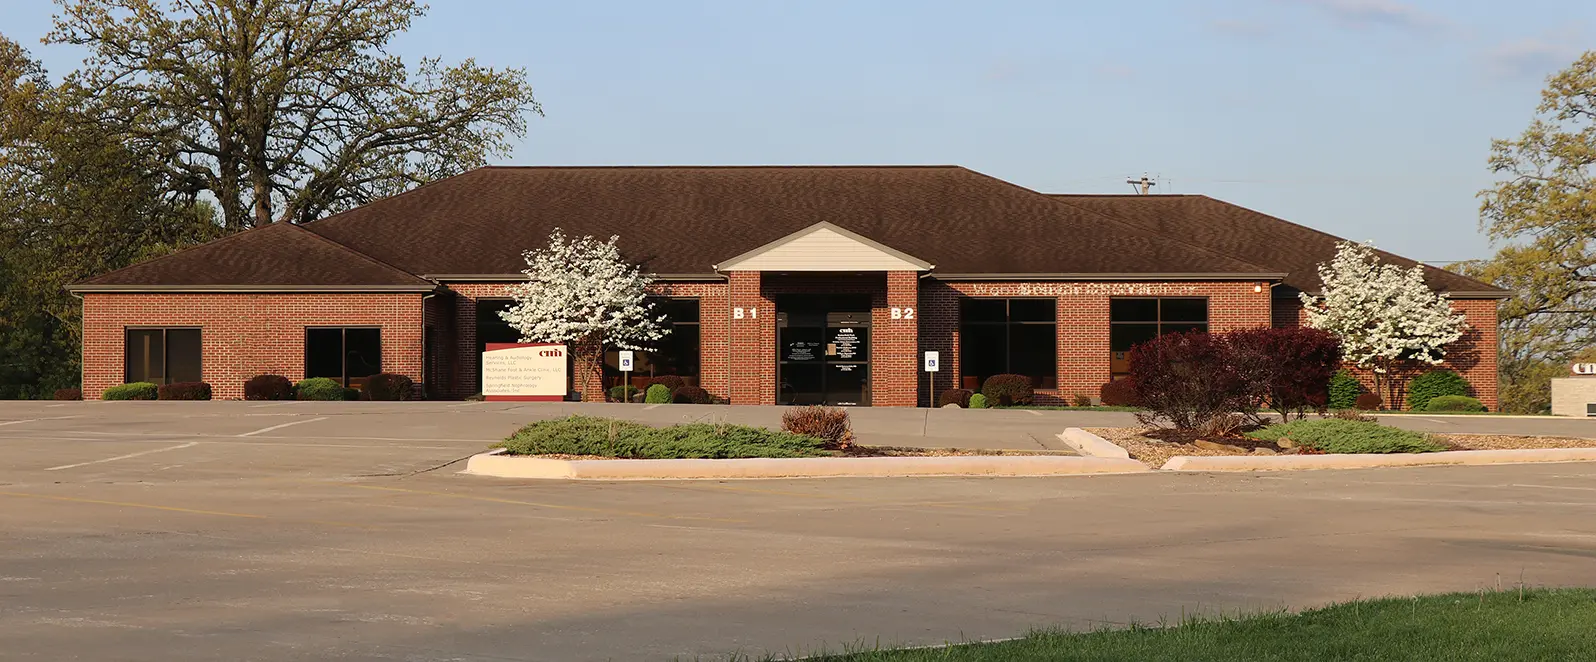 CMH Pulmonology Clinic building exterior